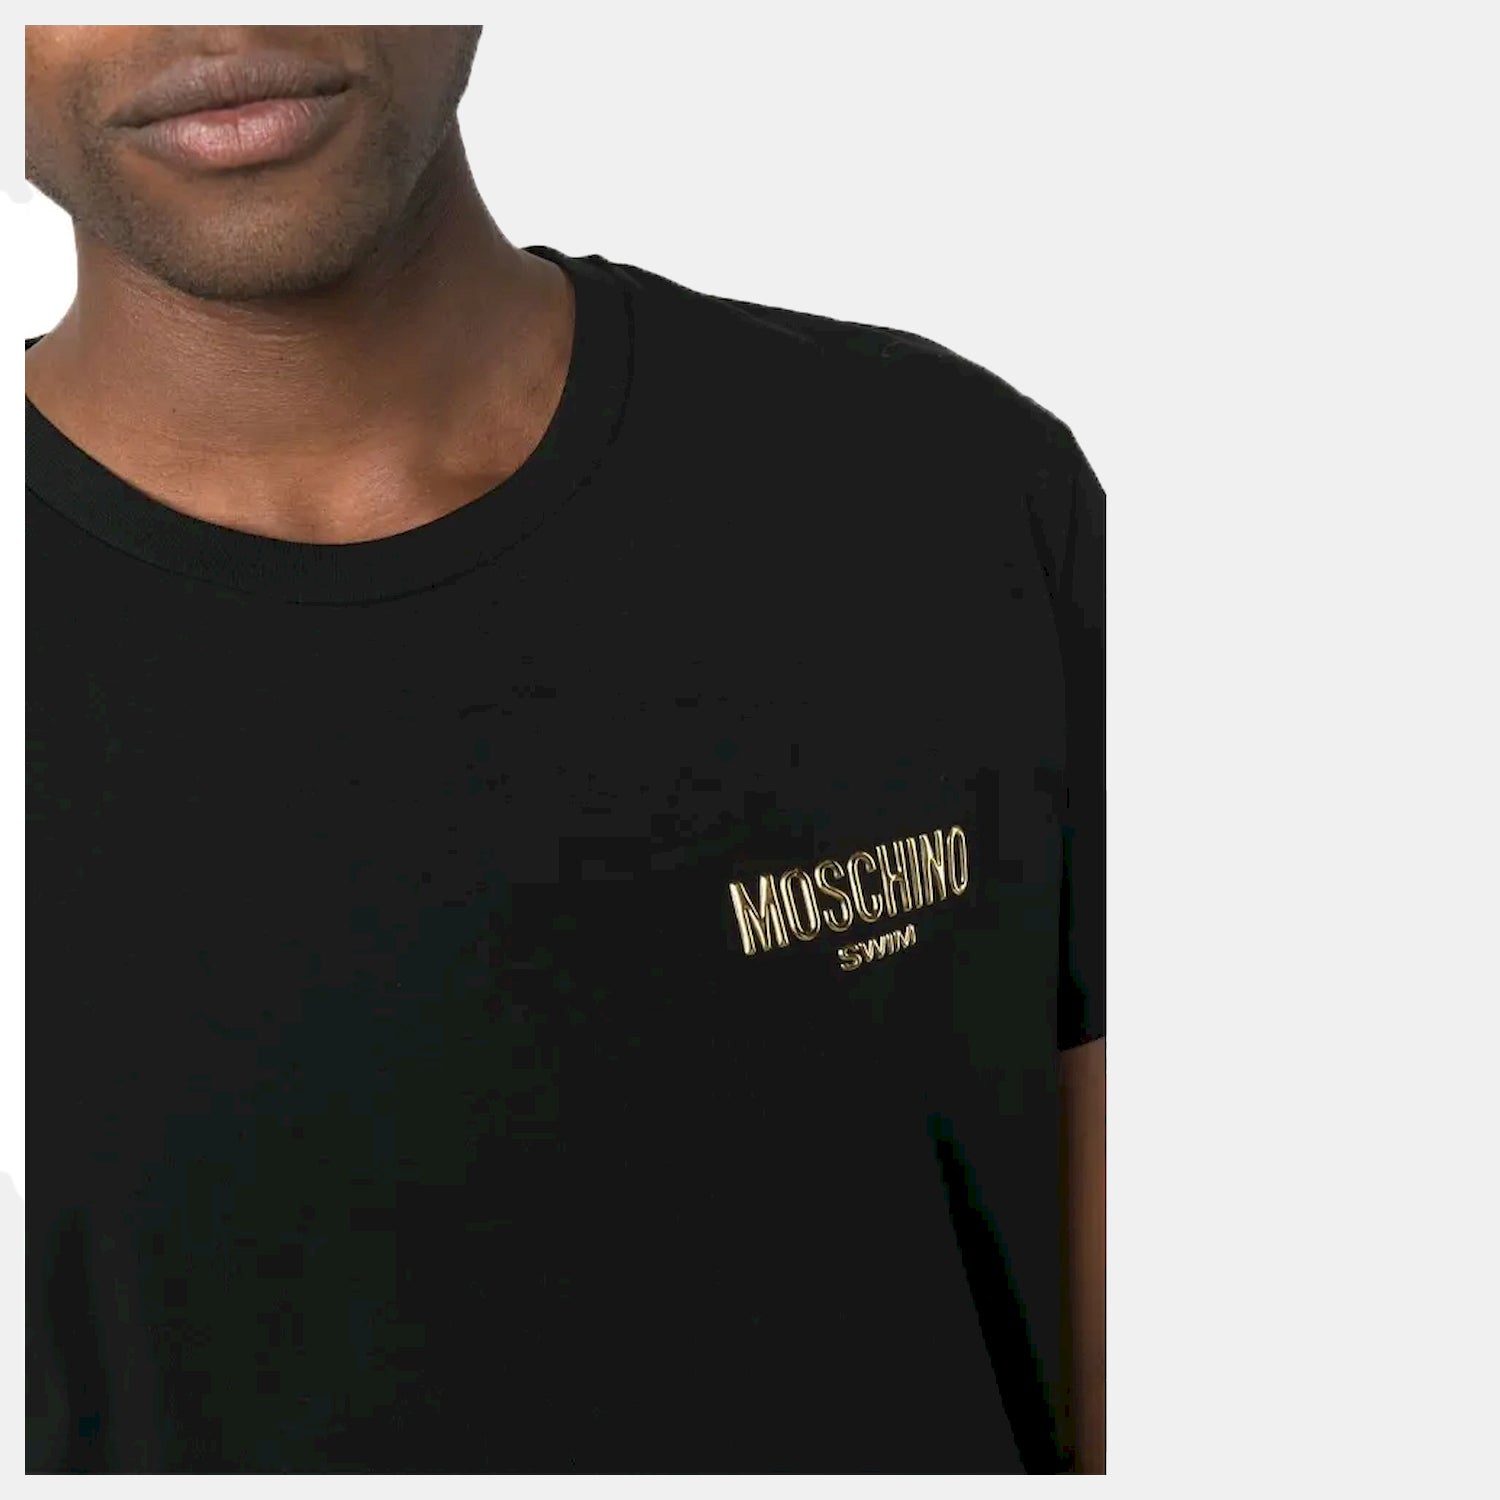 Moschino T Shirt A0716 9411 Black Preto_shot3